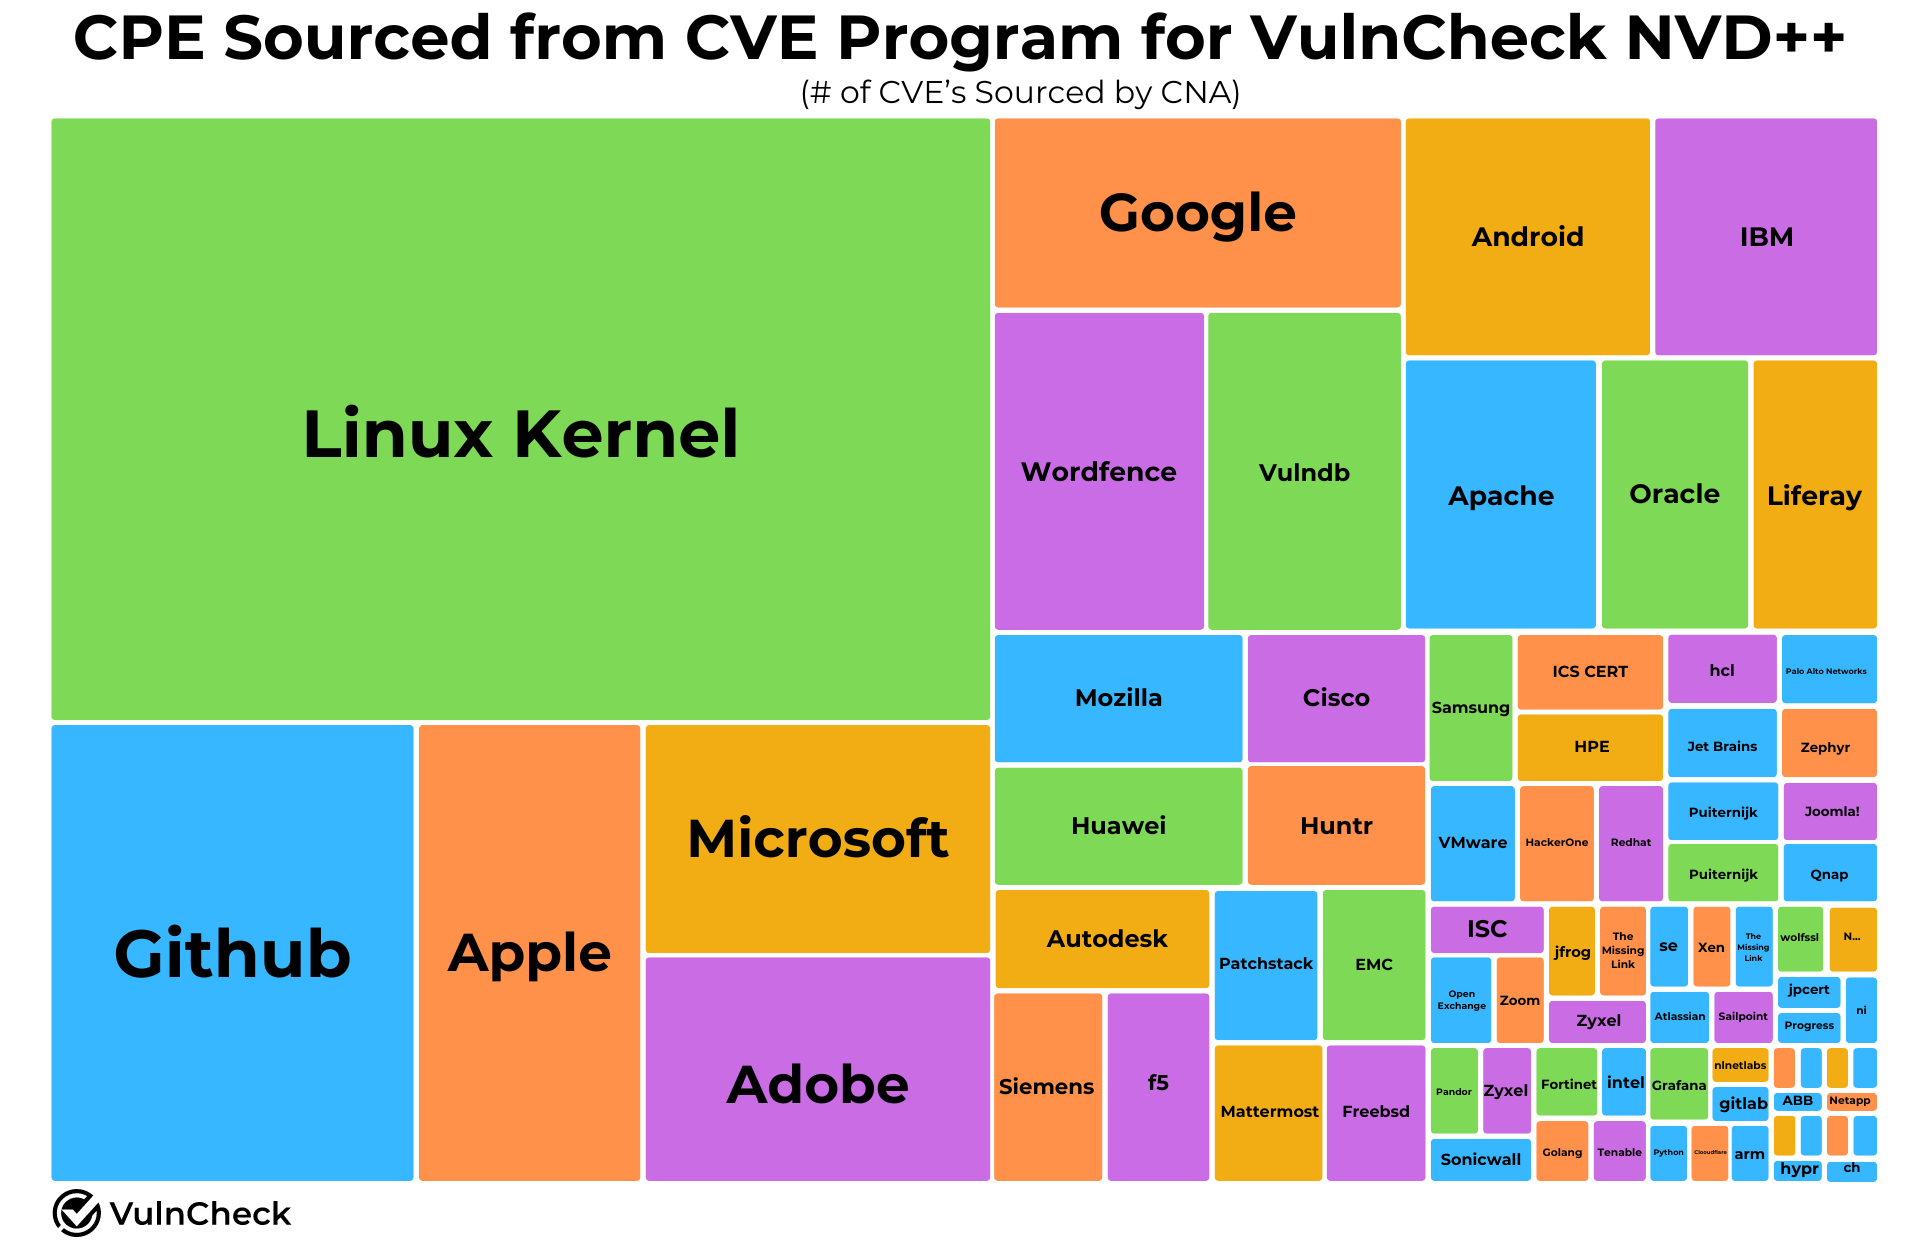 VulnCheck NVD++ CPE